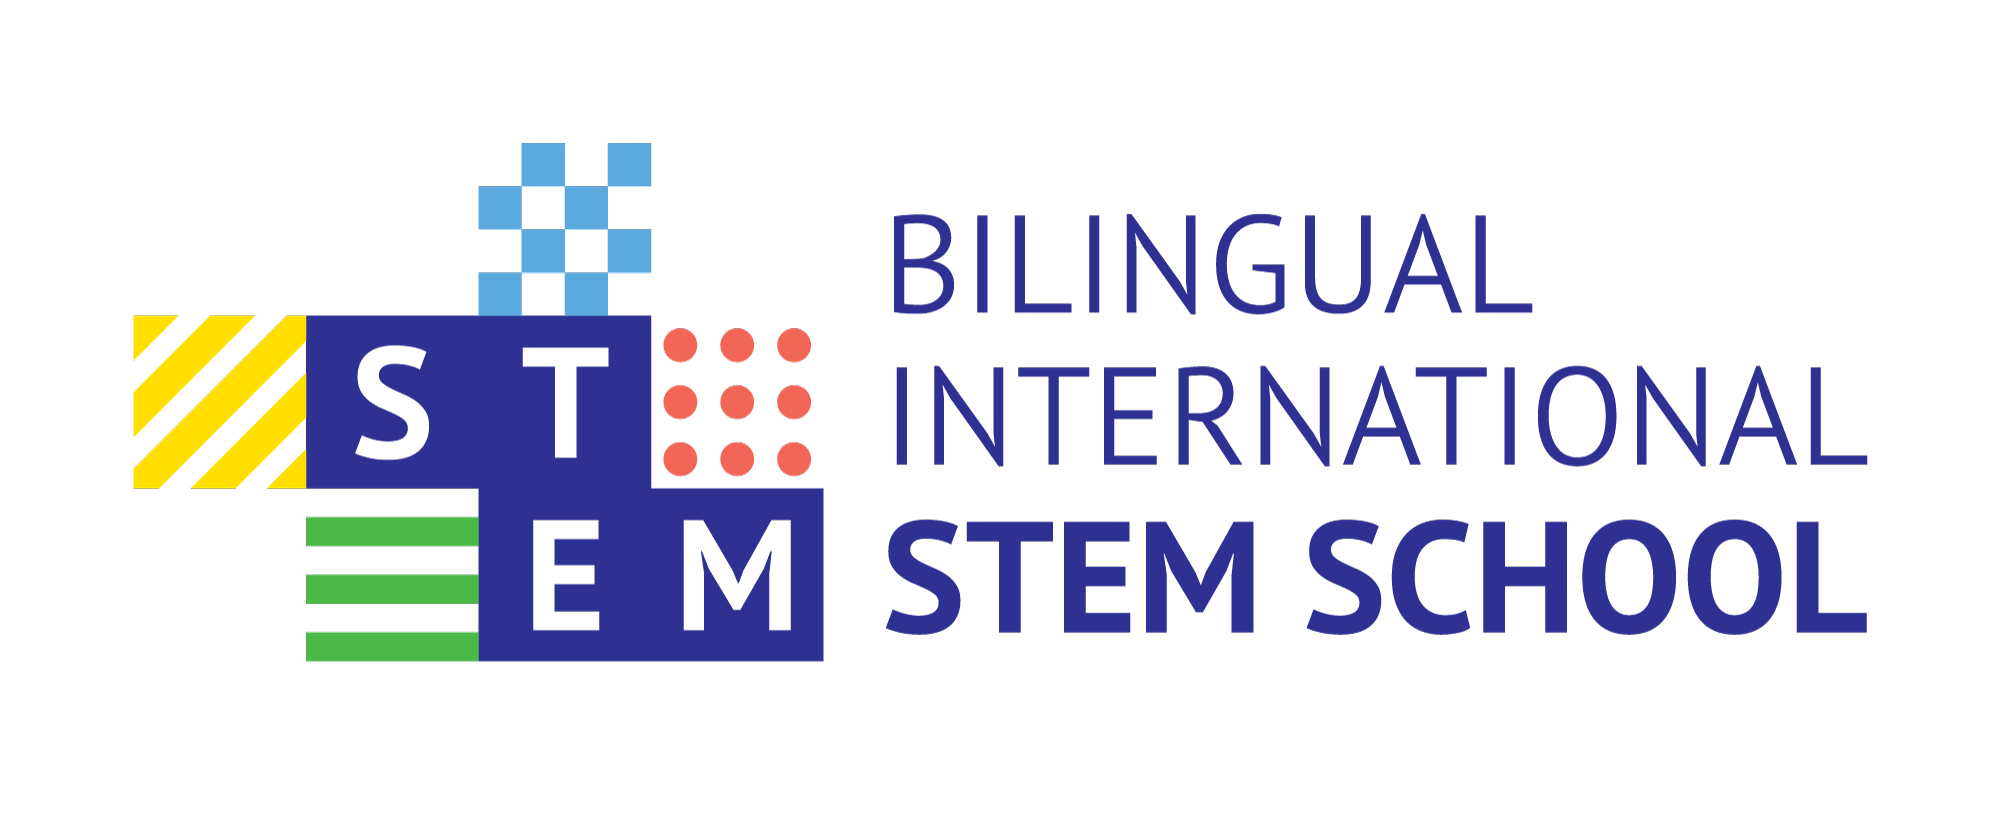 Bilingual International STEM School